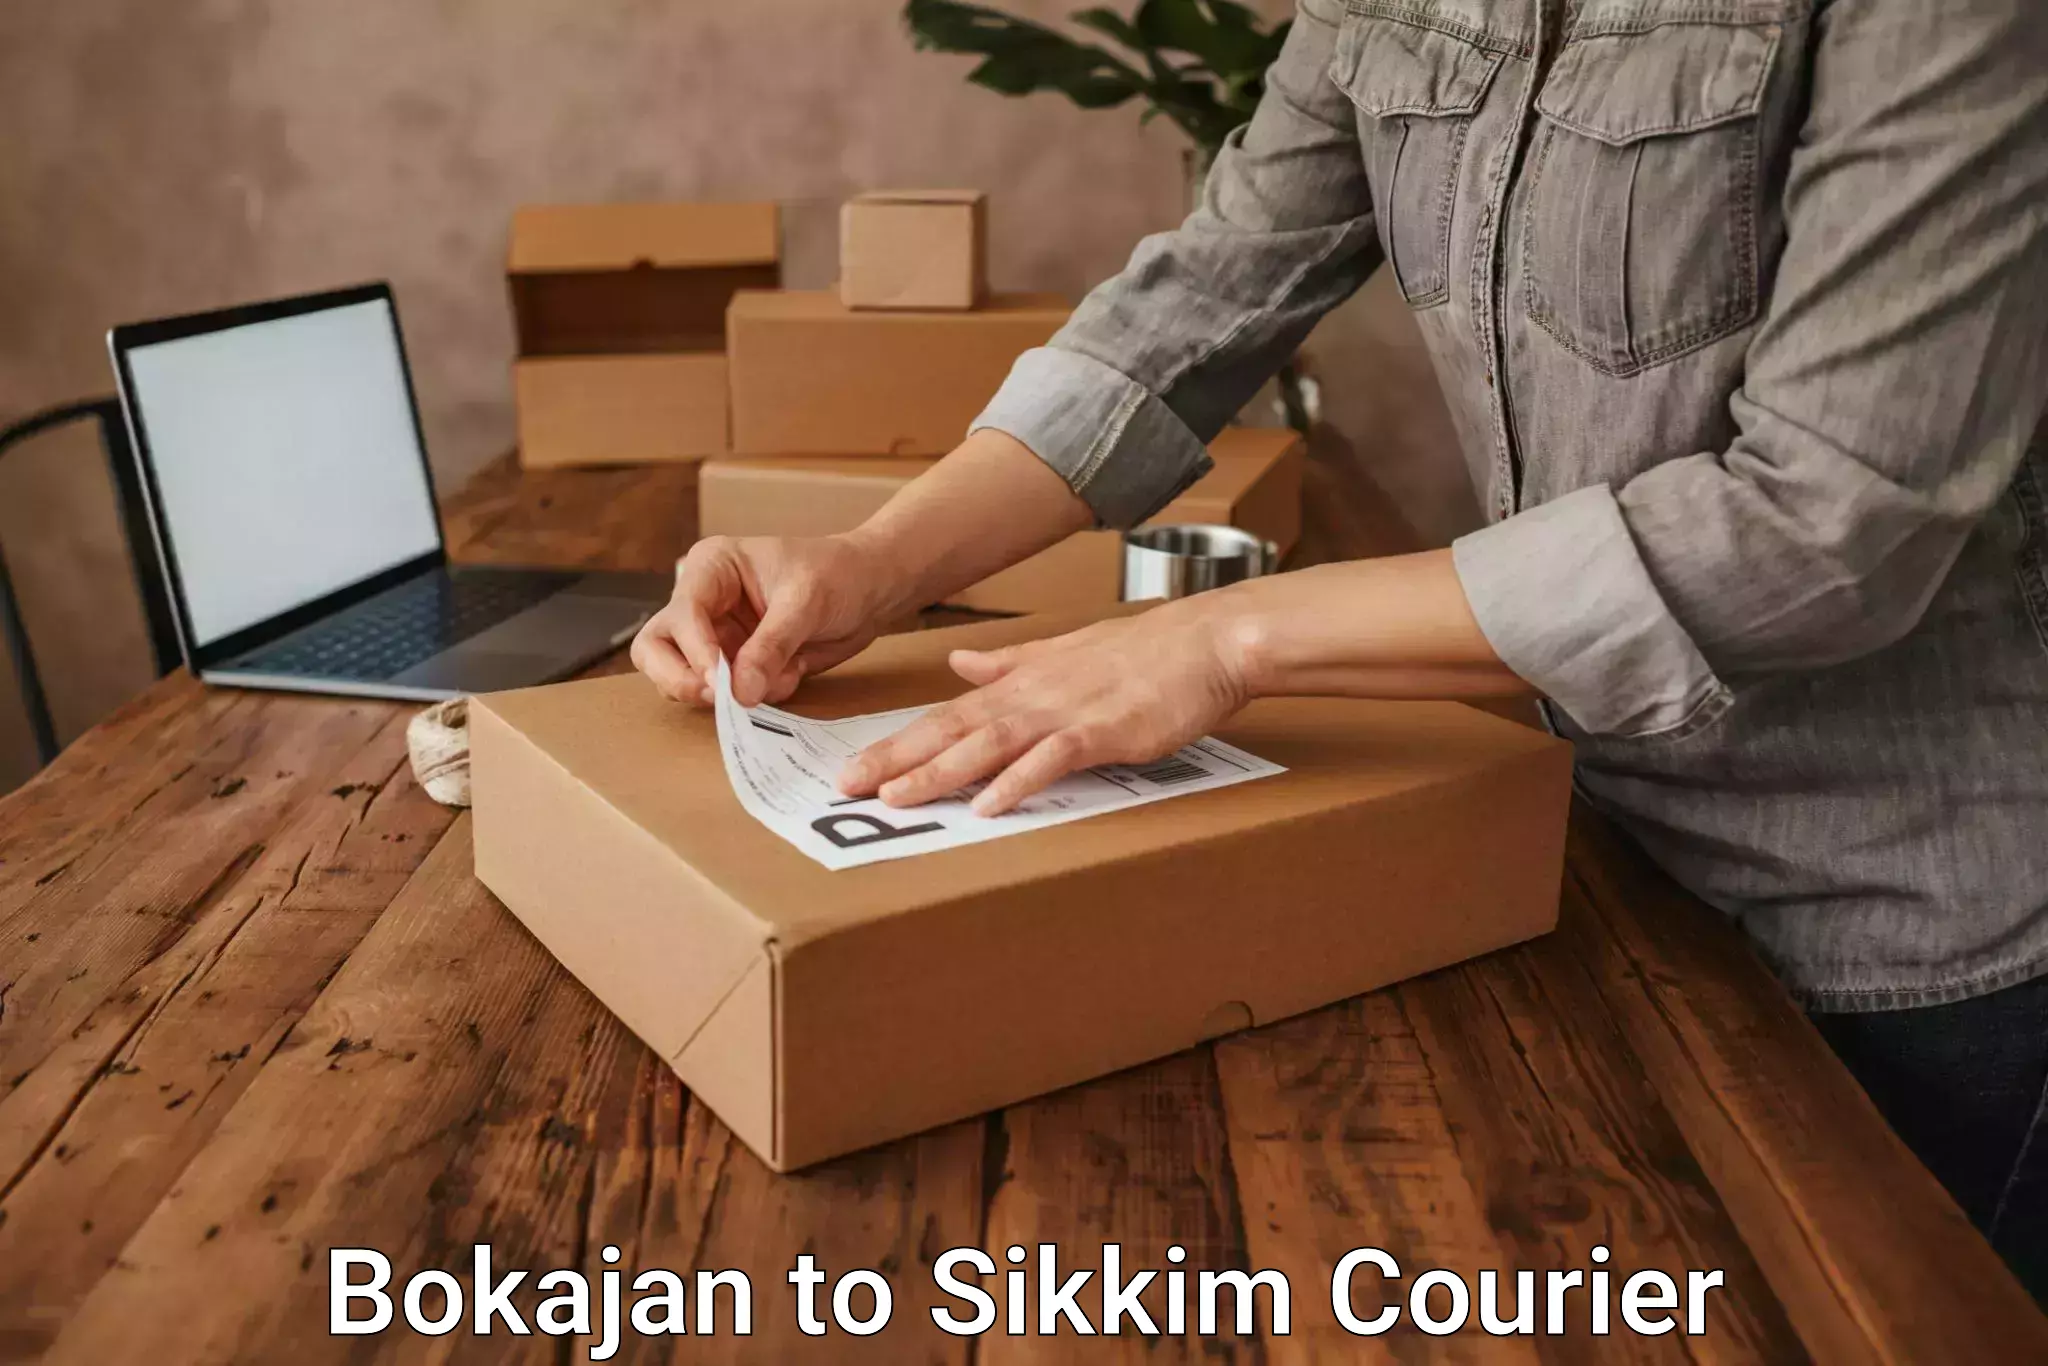 High value parcel delivery in Bokajan to Pelling